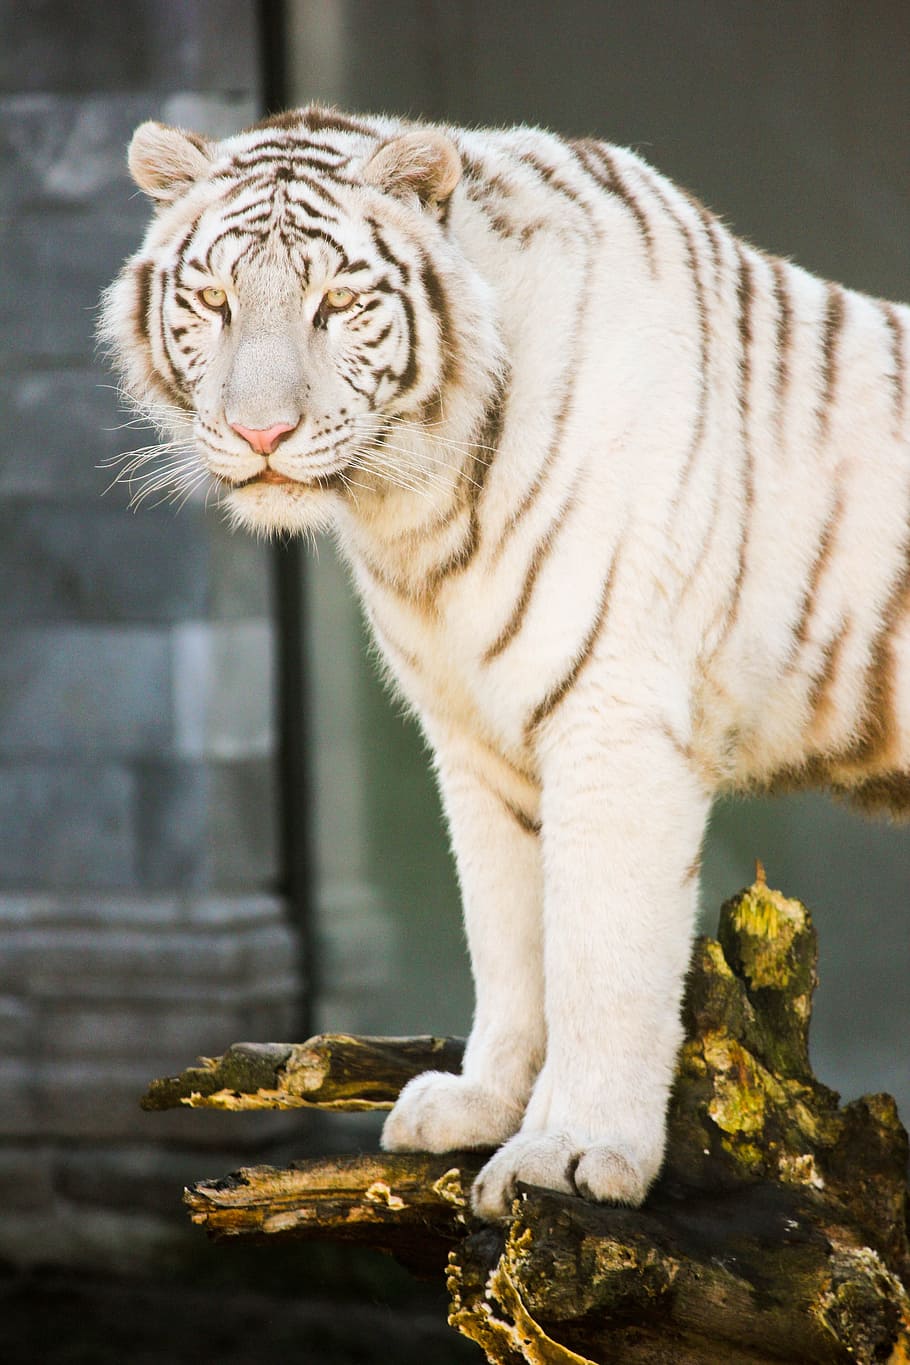 albino tiger, looking, camera lens, white tiger, feline, zoo, animal, animal themes, one animal, animal wildlife